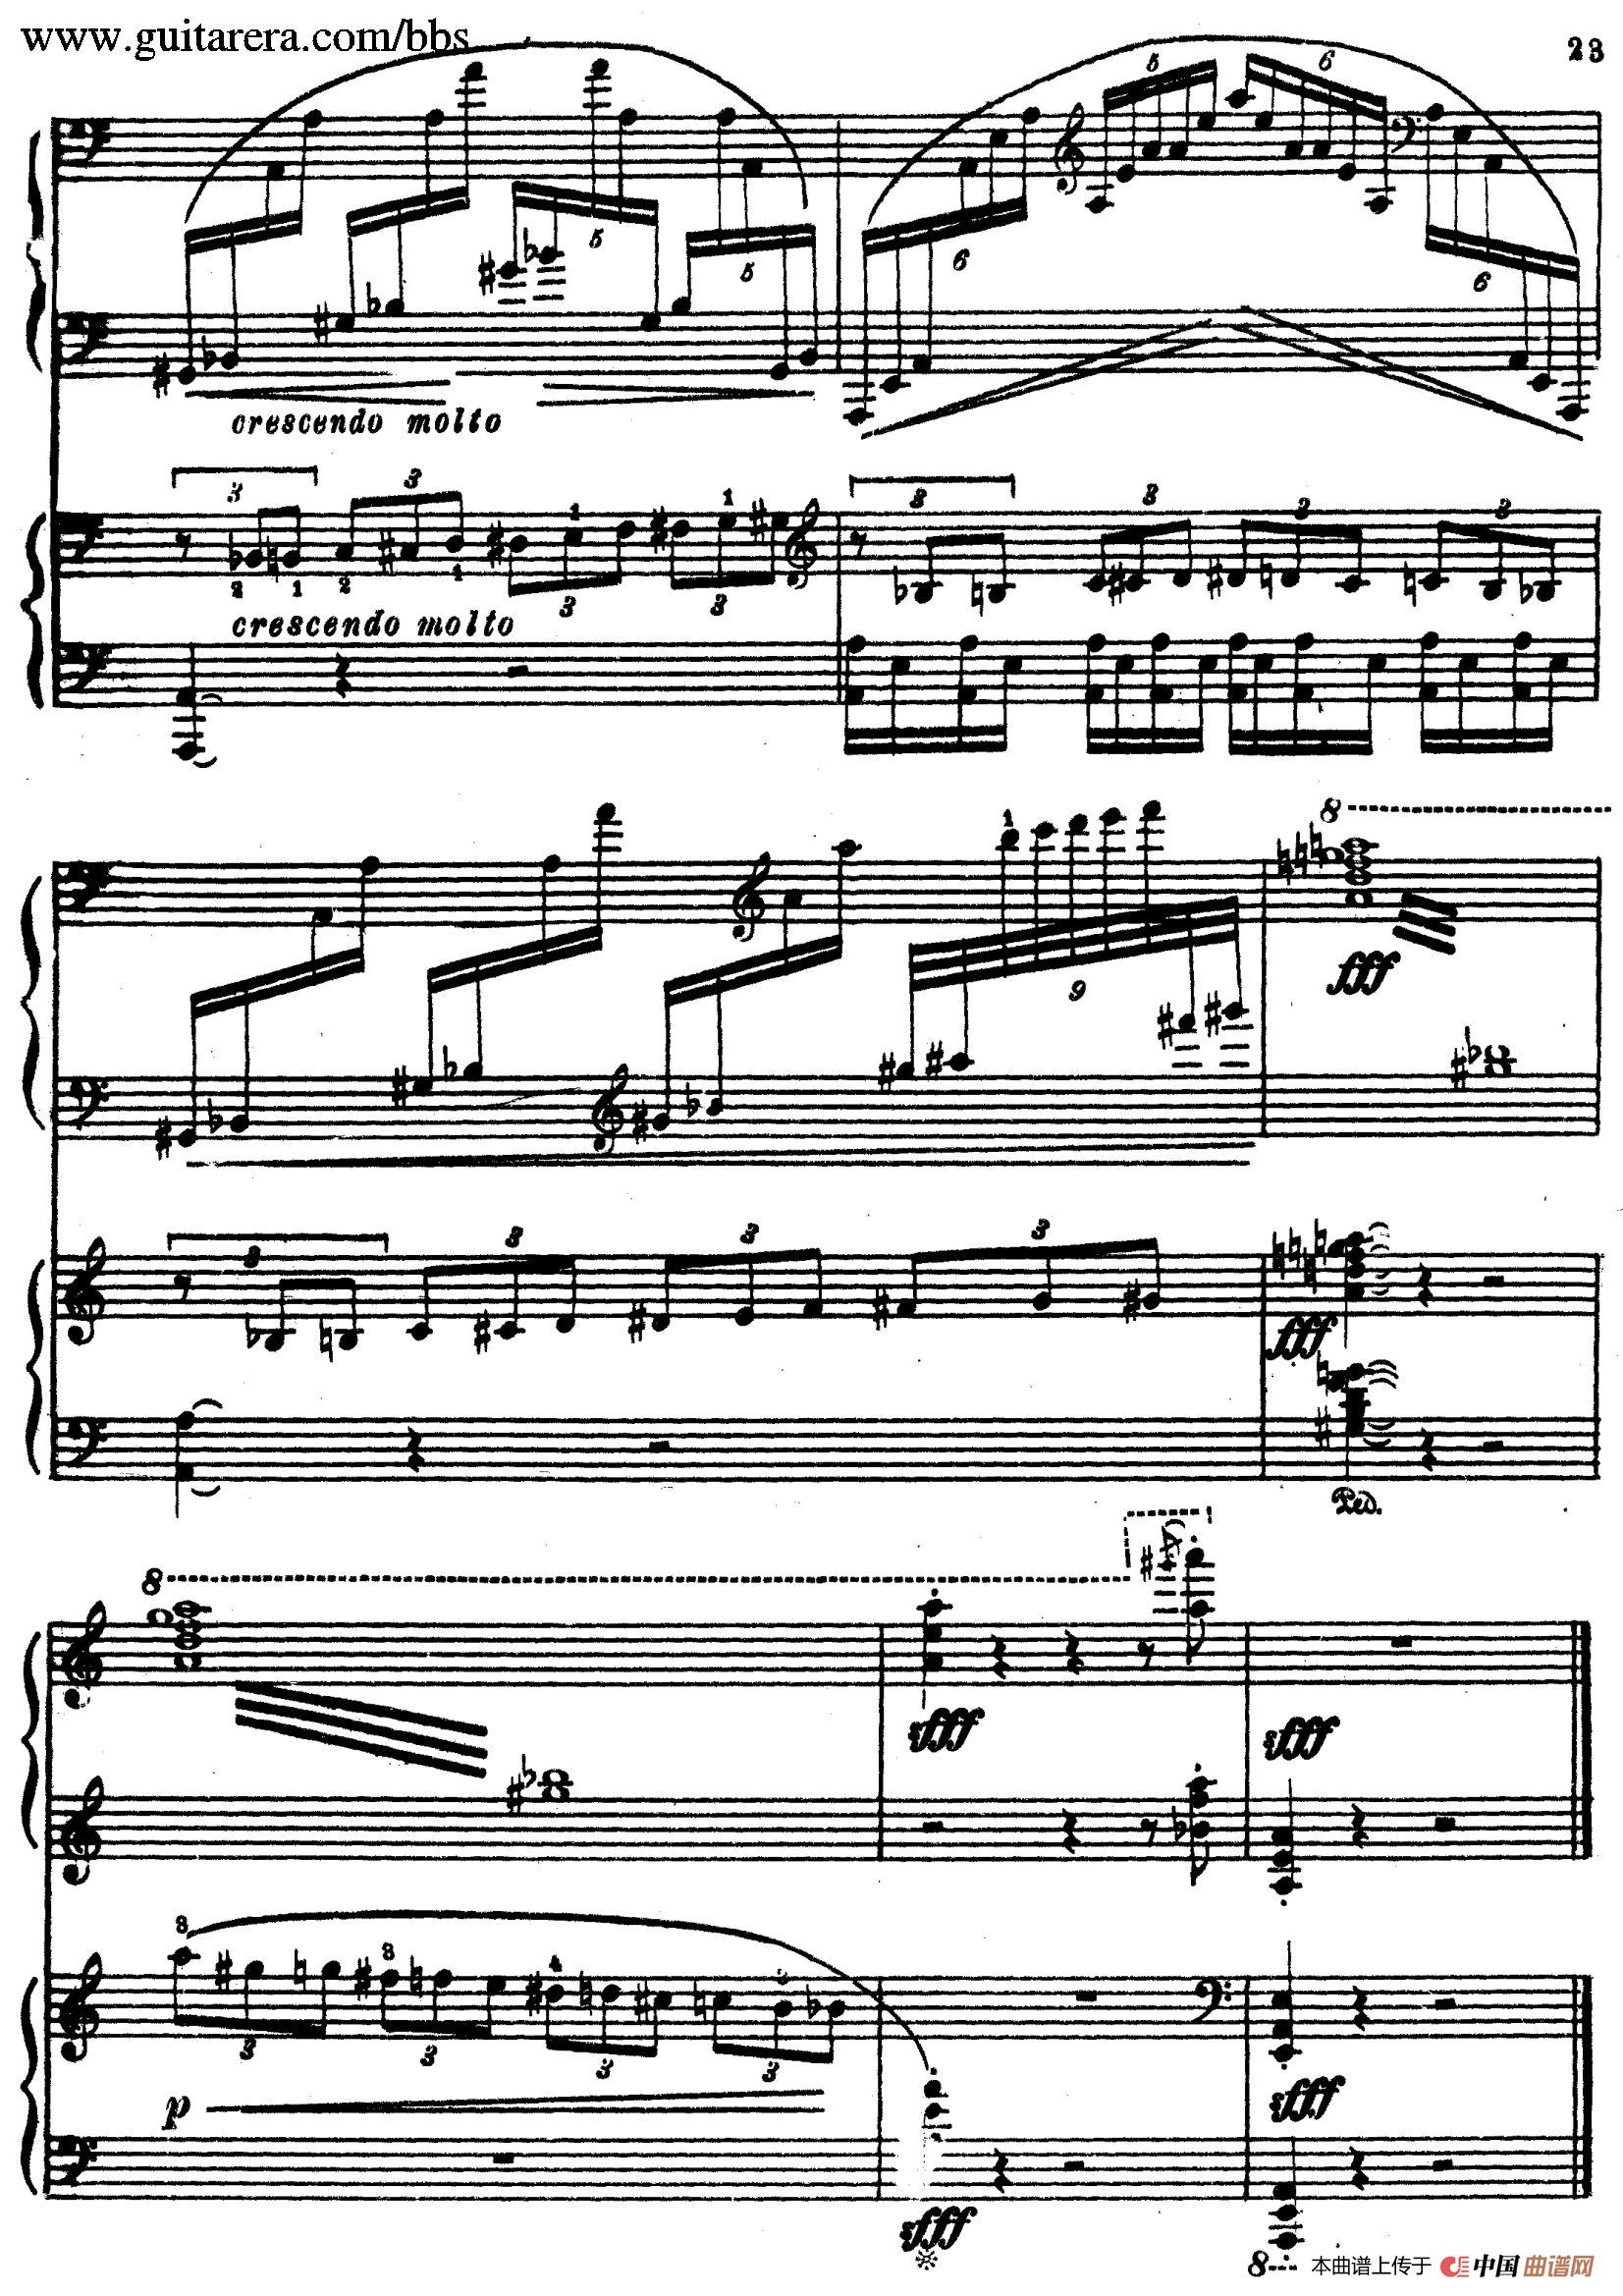 《Variation on a Theme by Paganini》钢琴曲谱图分享